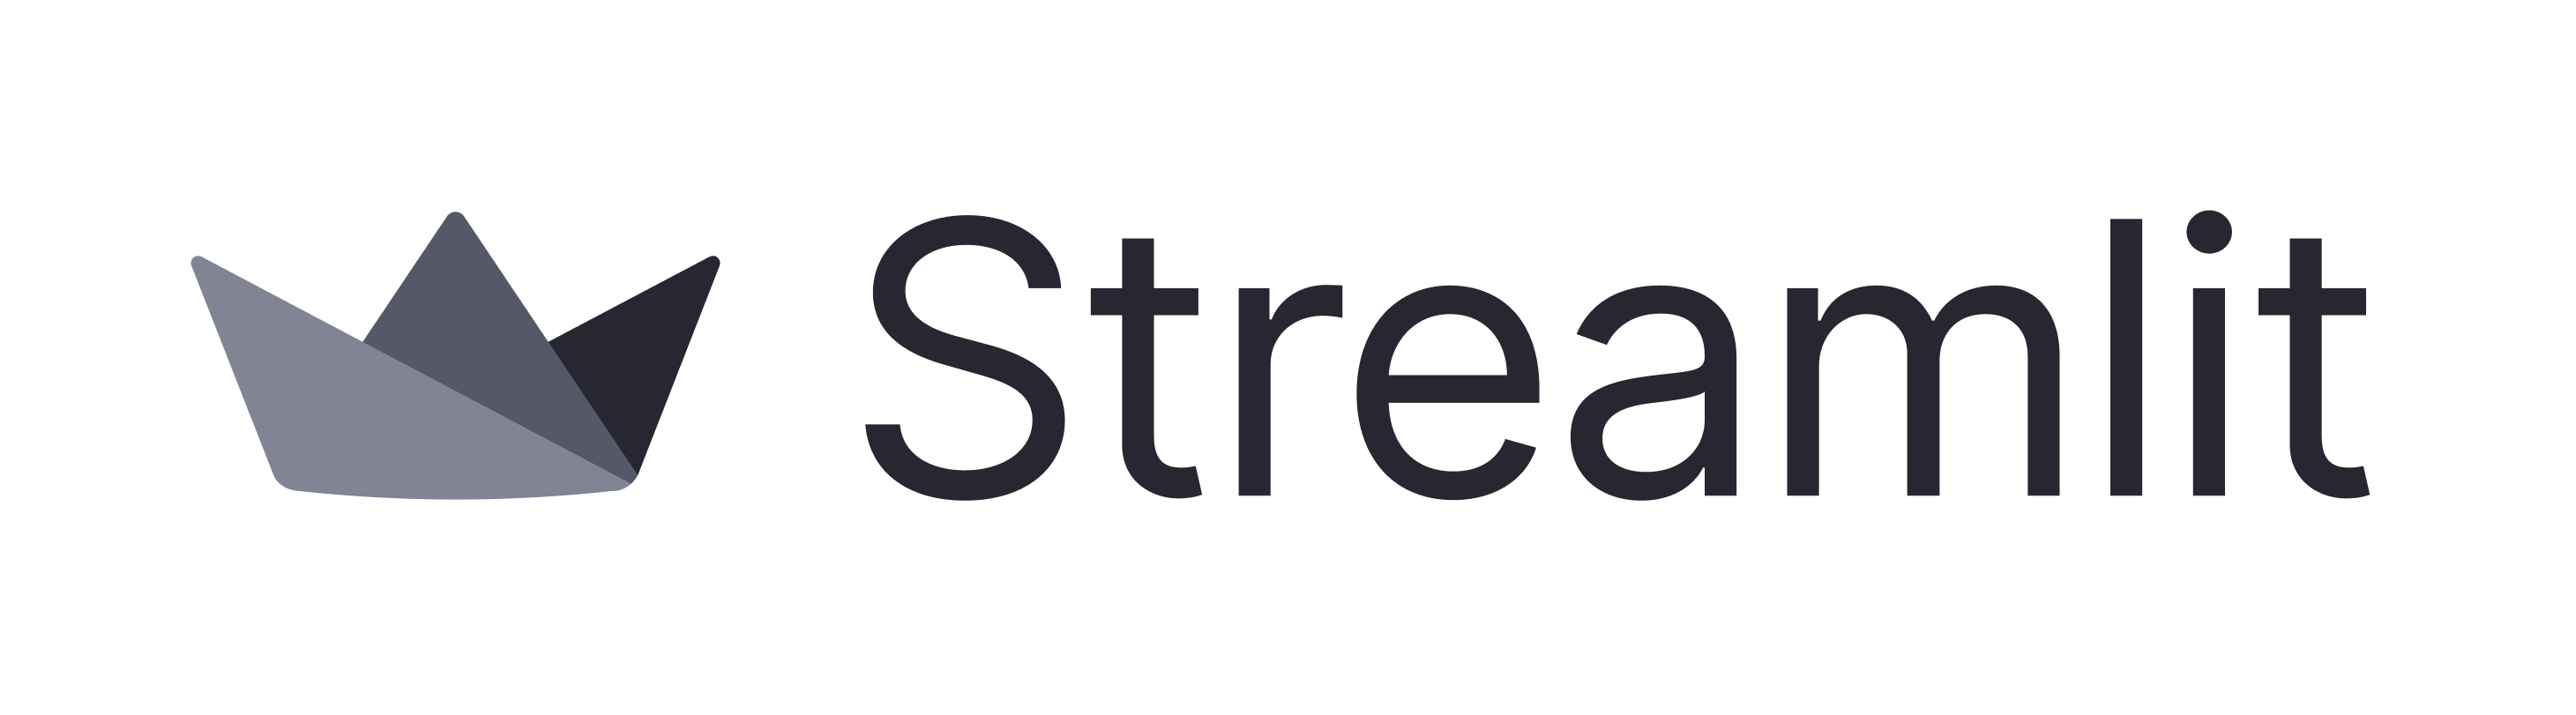 Streamlit dark horizontal logo on light background